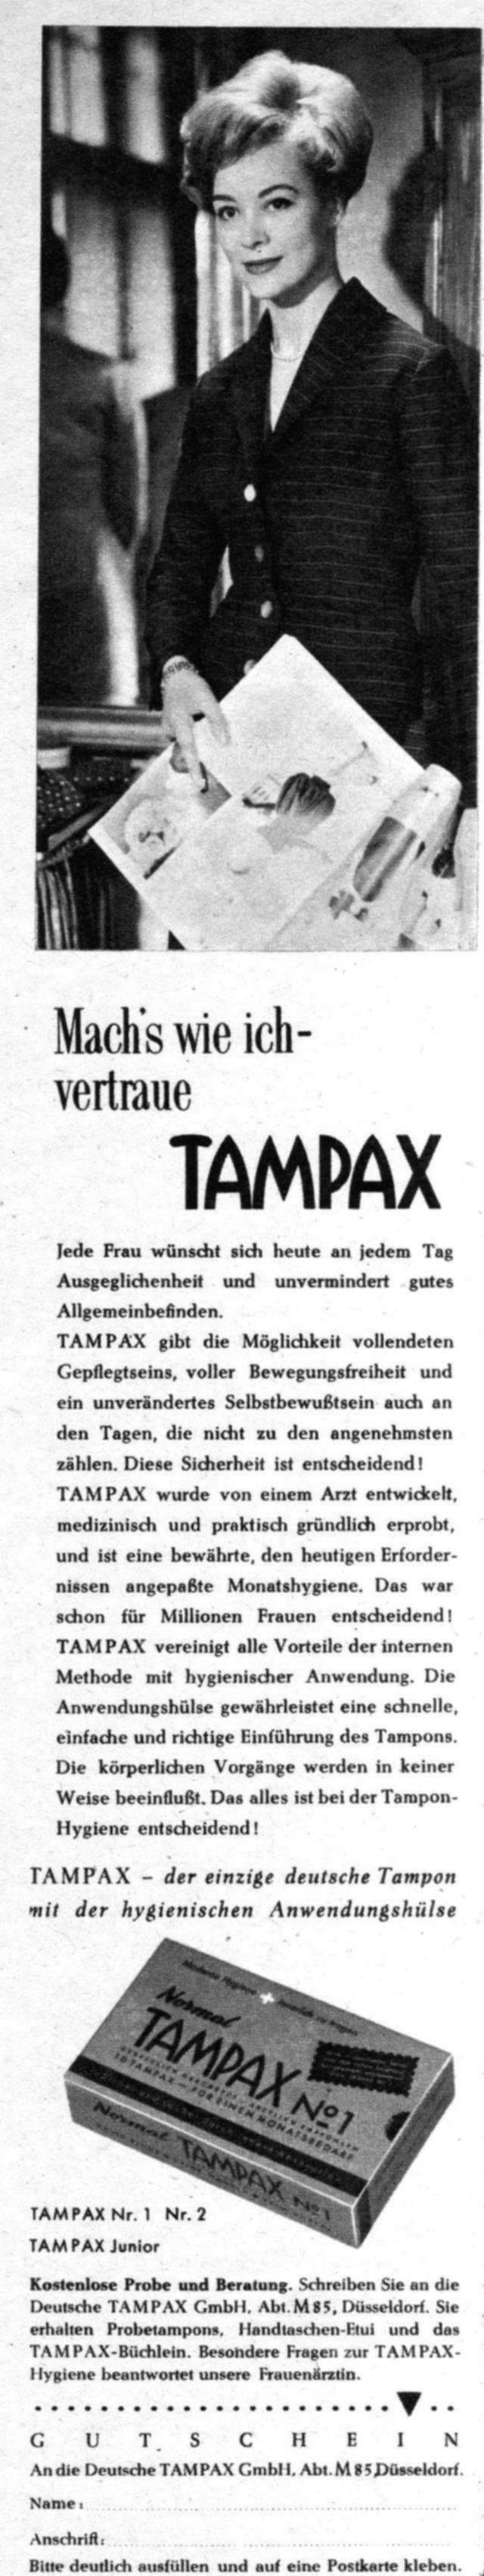 Tampax 1960 036.jpg